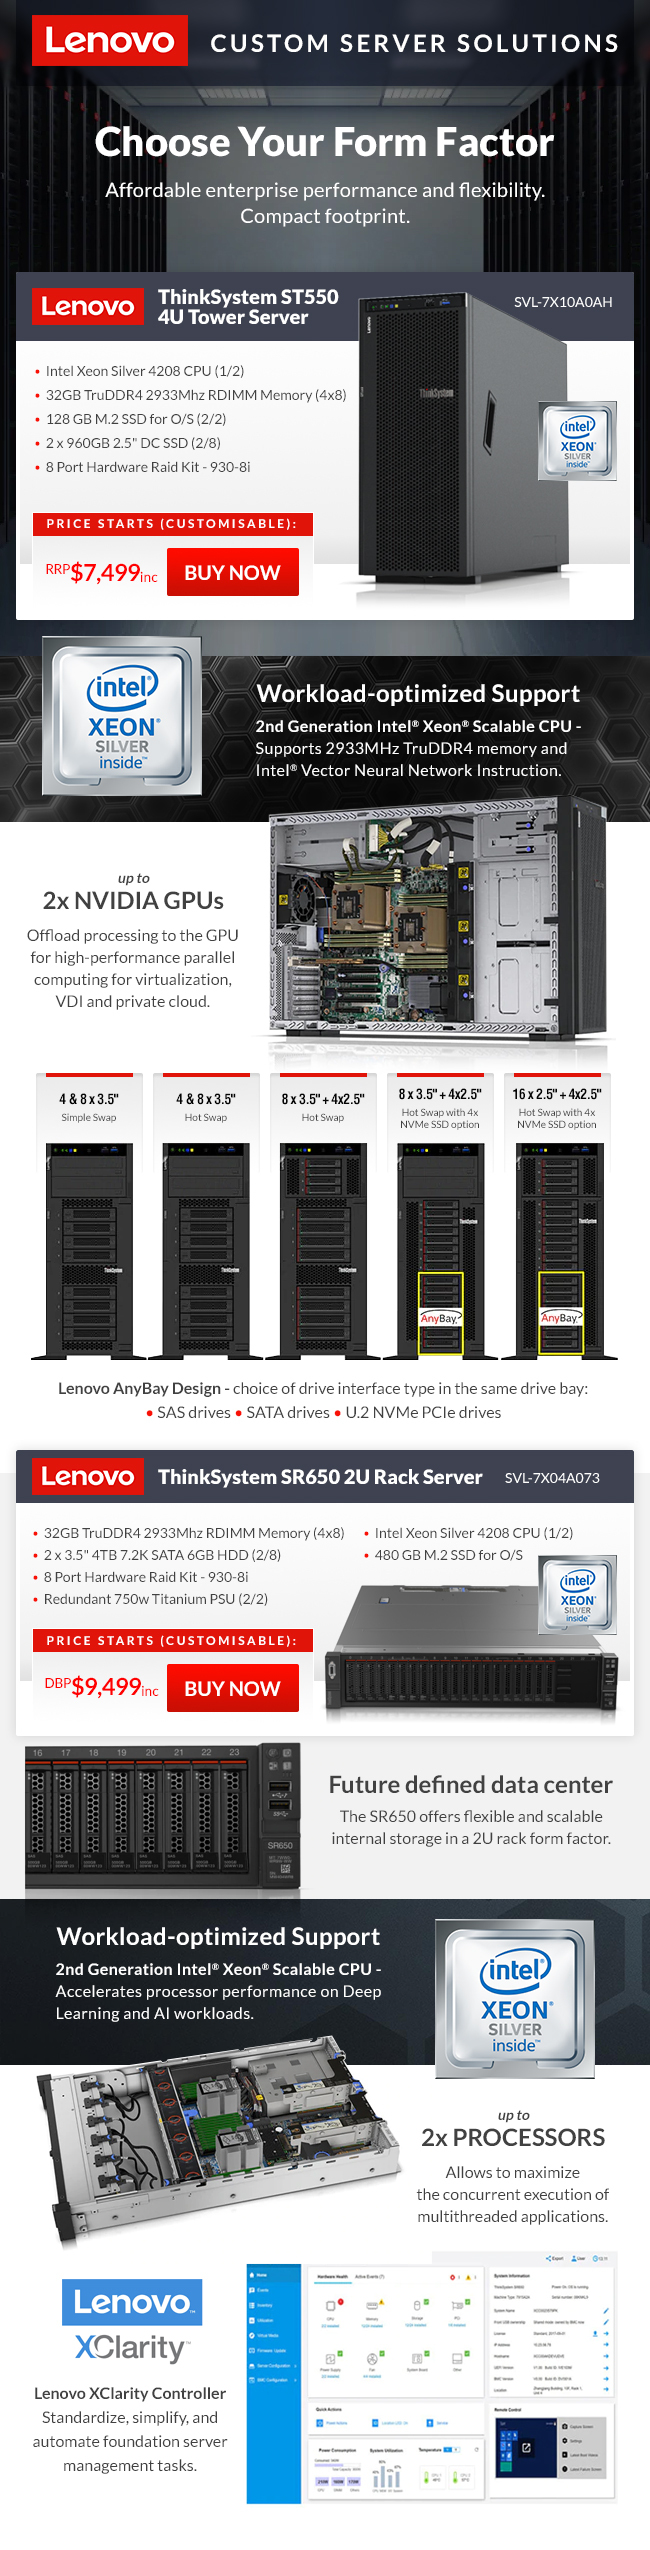 Lenovo Custom Server Solutions